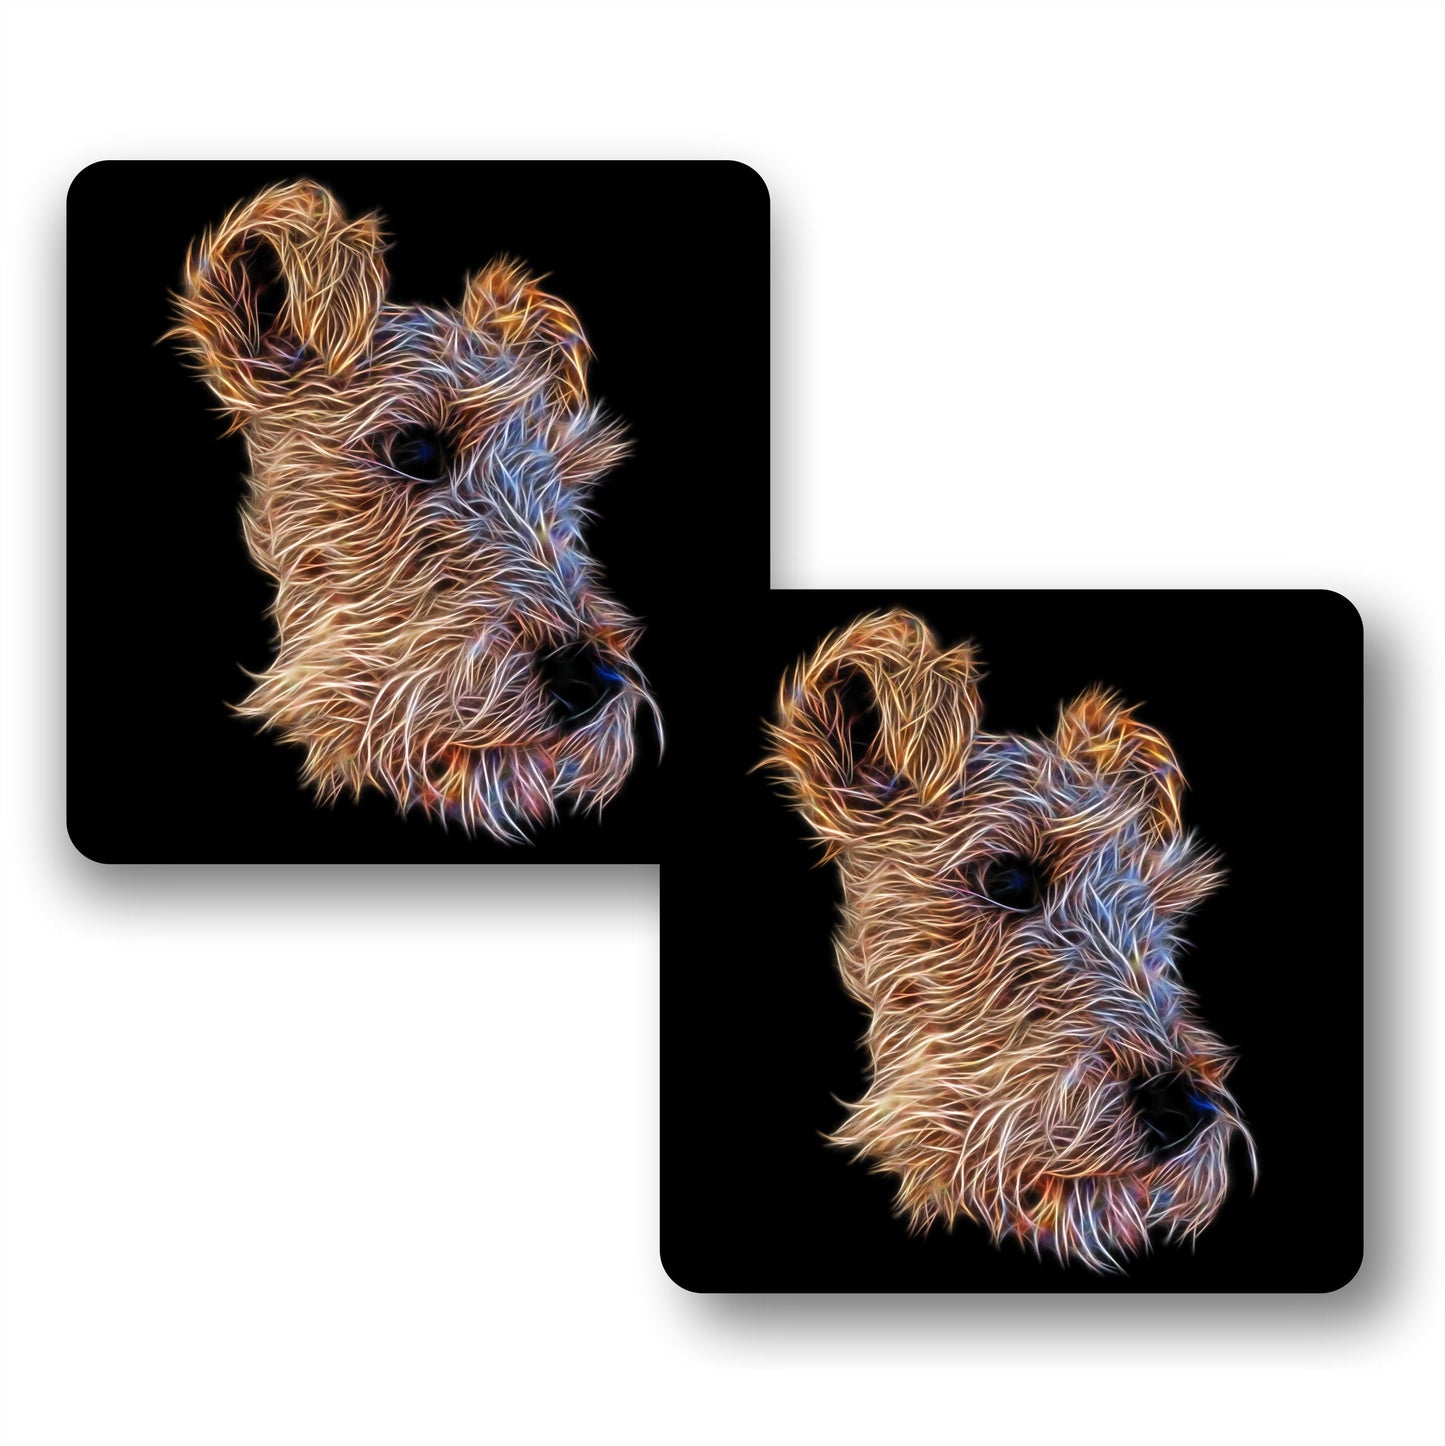 Lakeland Terrier Coasters, Set of 2, with Stunning Fractal Art Design.